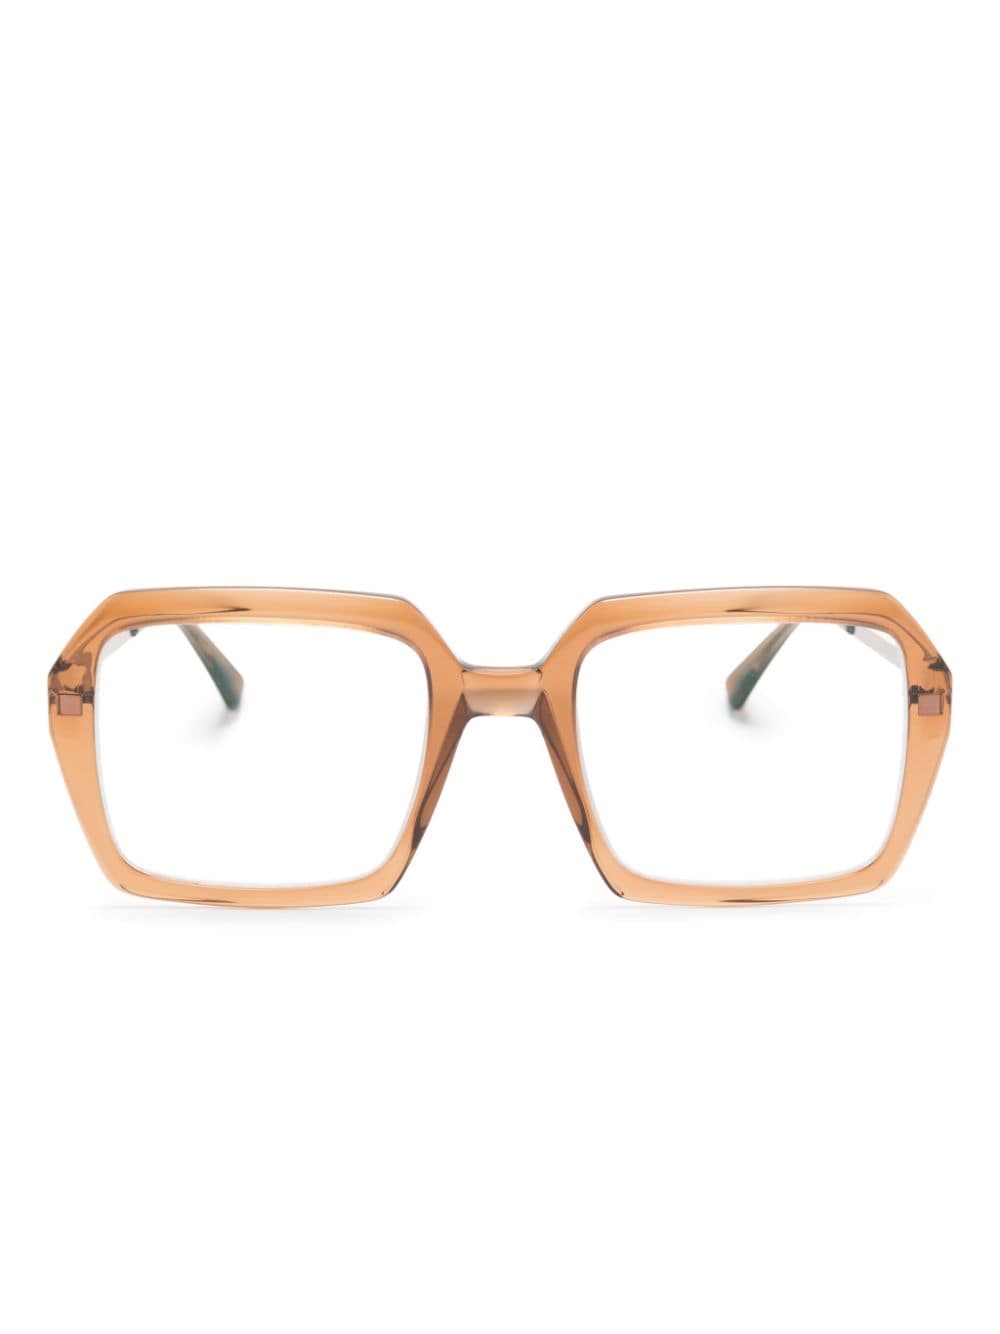 mykita lunettes de vue carrées vanilla - marron